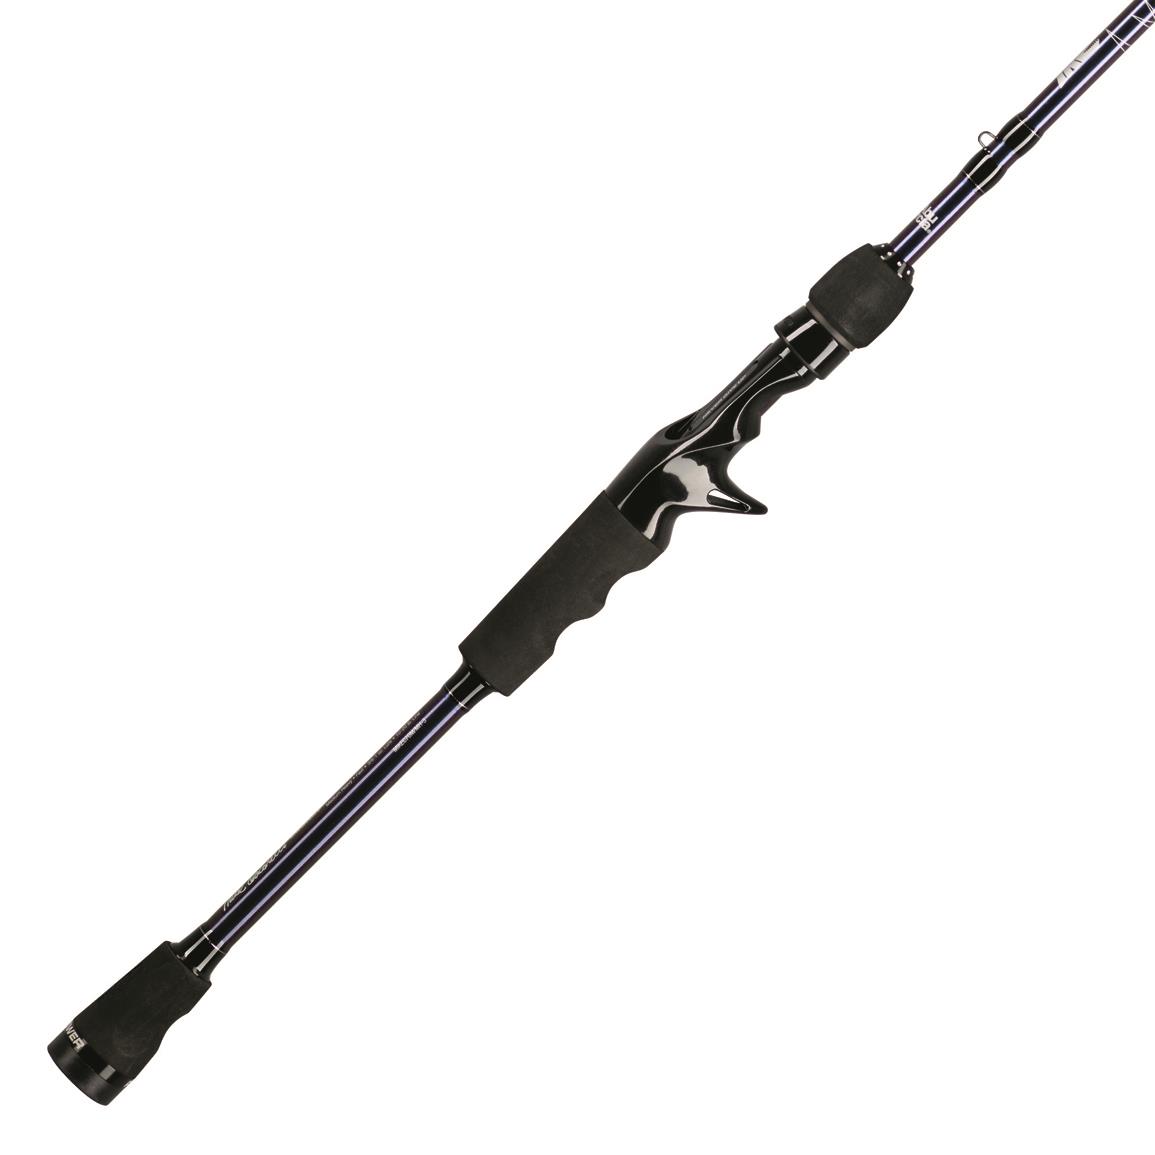 Abu Garcia Ike Signature Series Delay Casting Rod, 6'6" Length, Medium Heavy Power, Moderate Action